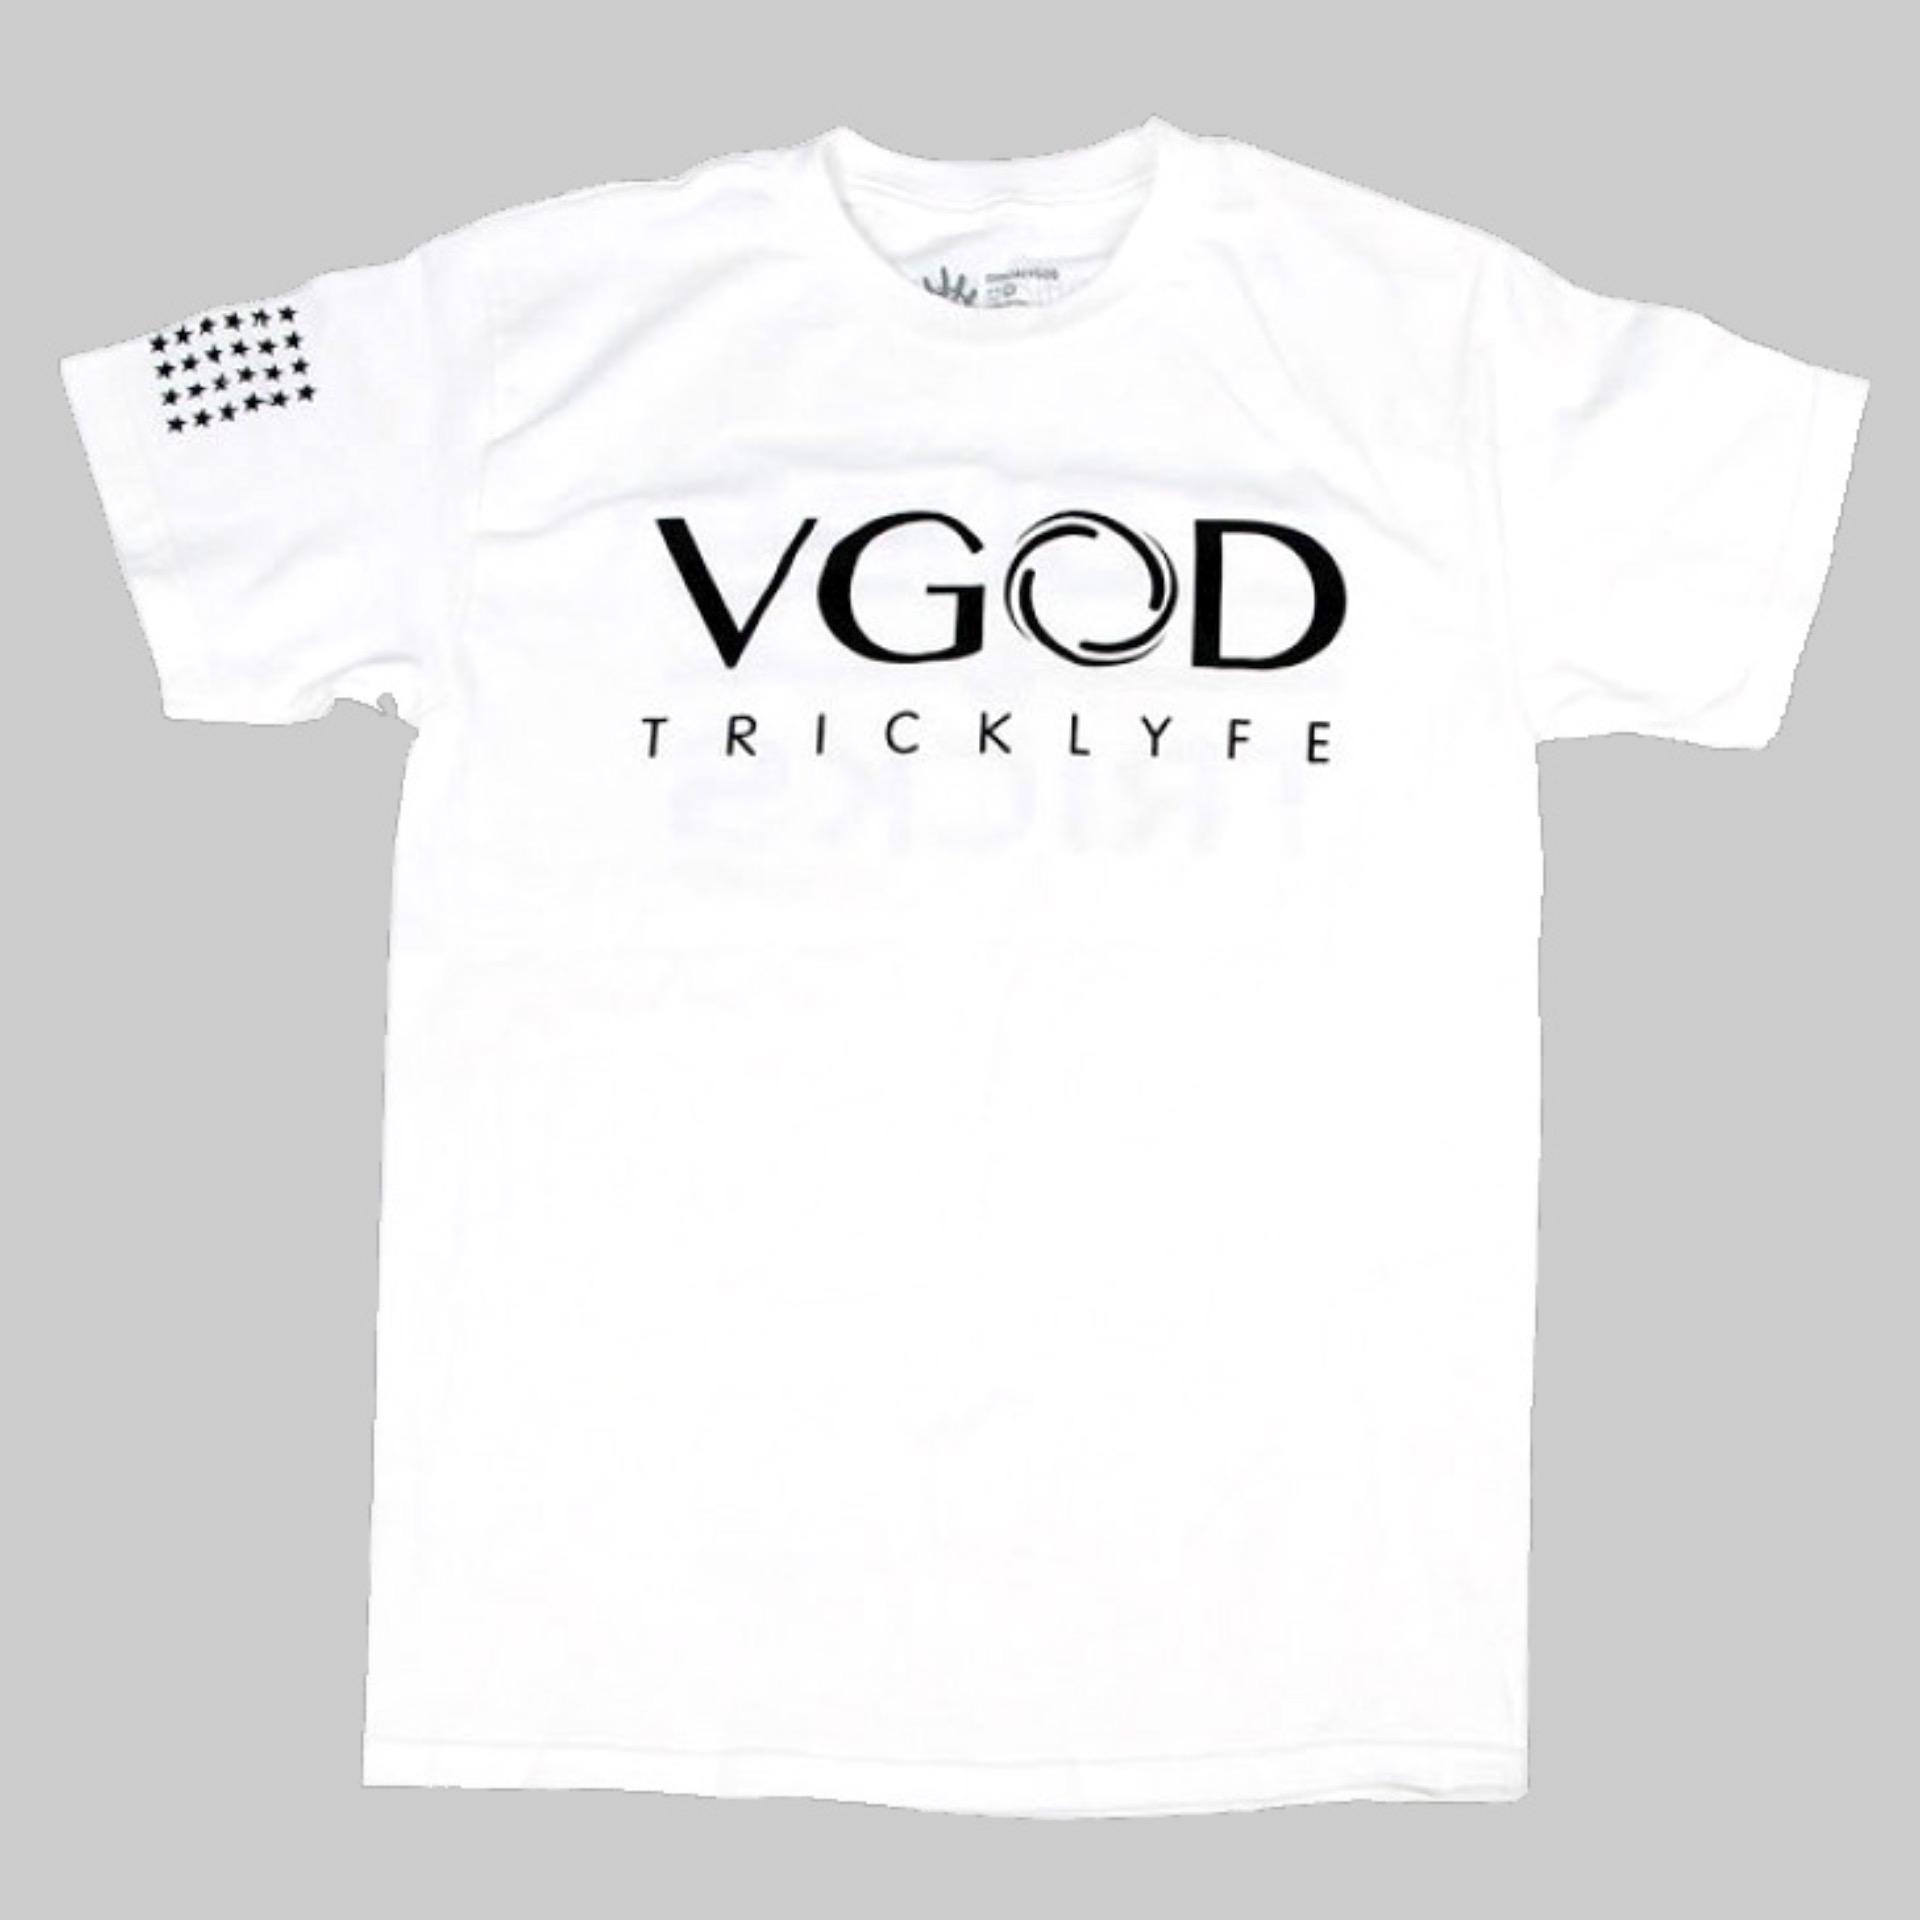 VGOD T-Shirt shirt Black or White